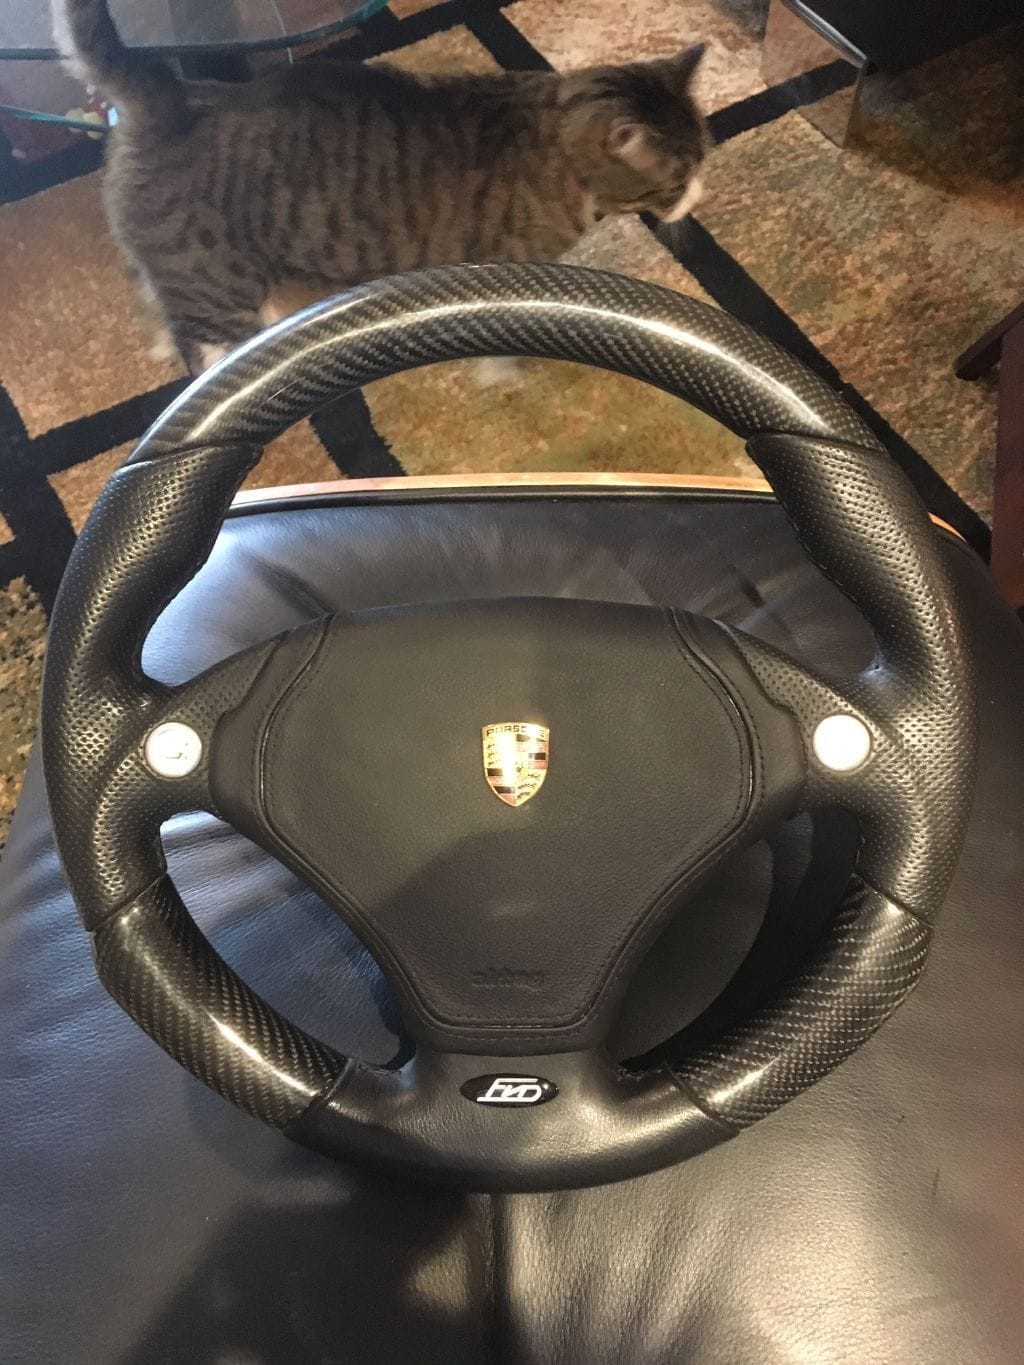 Accessories - FS: Porsche FVD German carbon fiber airbag steering wheel & shift knob - $2000 - Used - 1999 to 2004 Porsche 911 - Wheat Ridge, CO 80033, United States